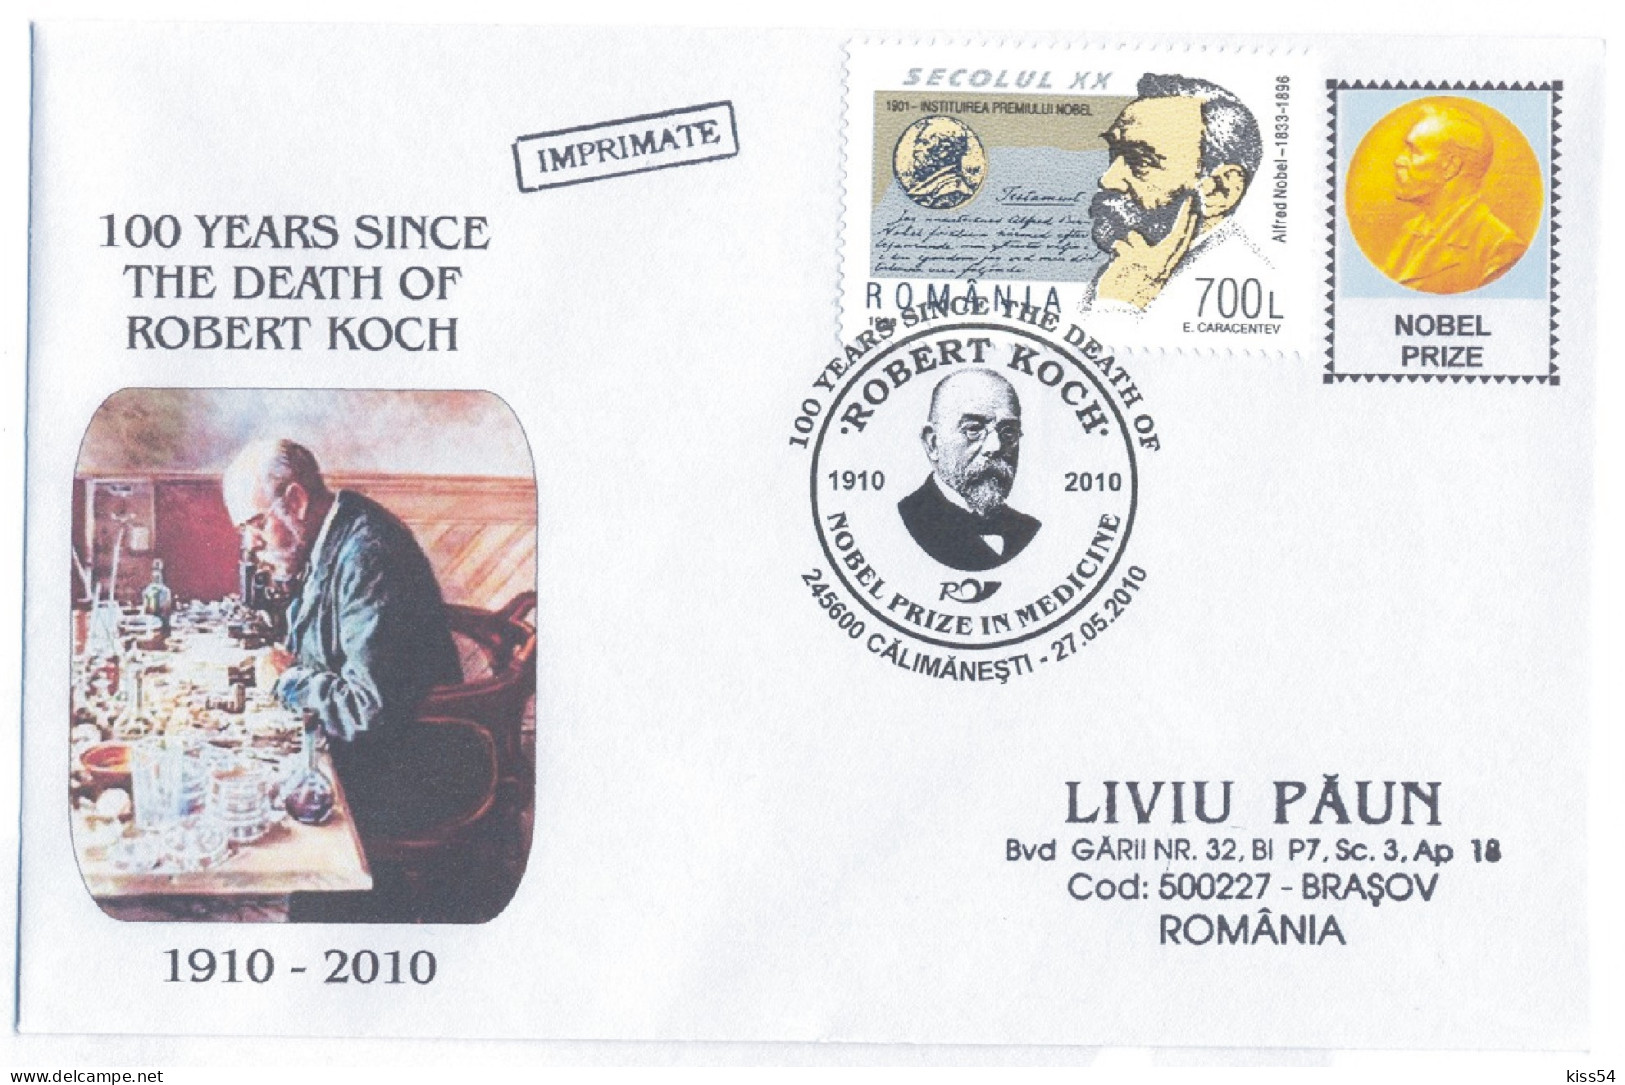 COV 17 - 1007 Robert KOCH, Nobel Prize In Medicine, Romania - Cover - Used - 2010 - Covers & Documents